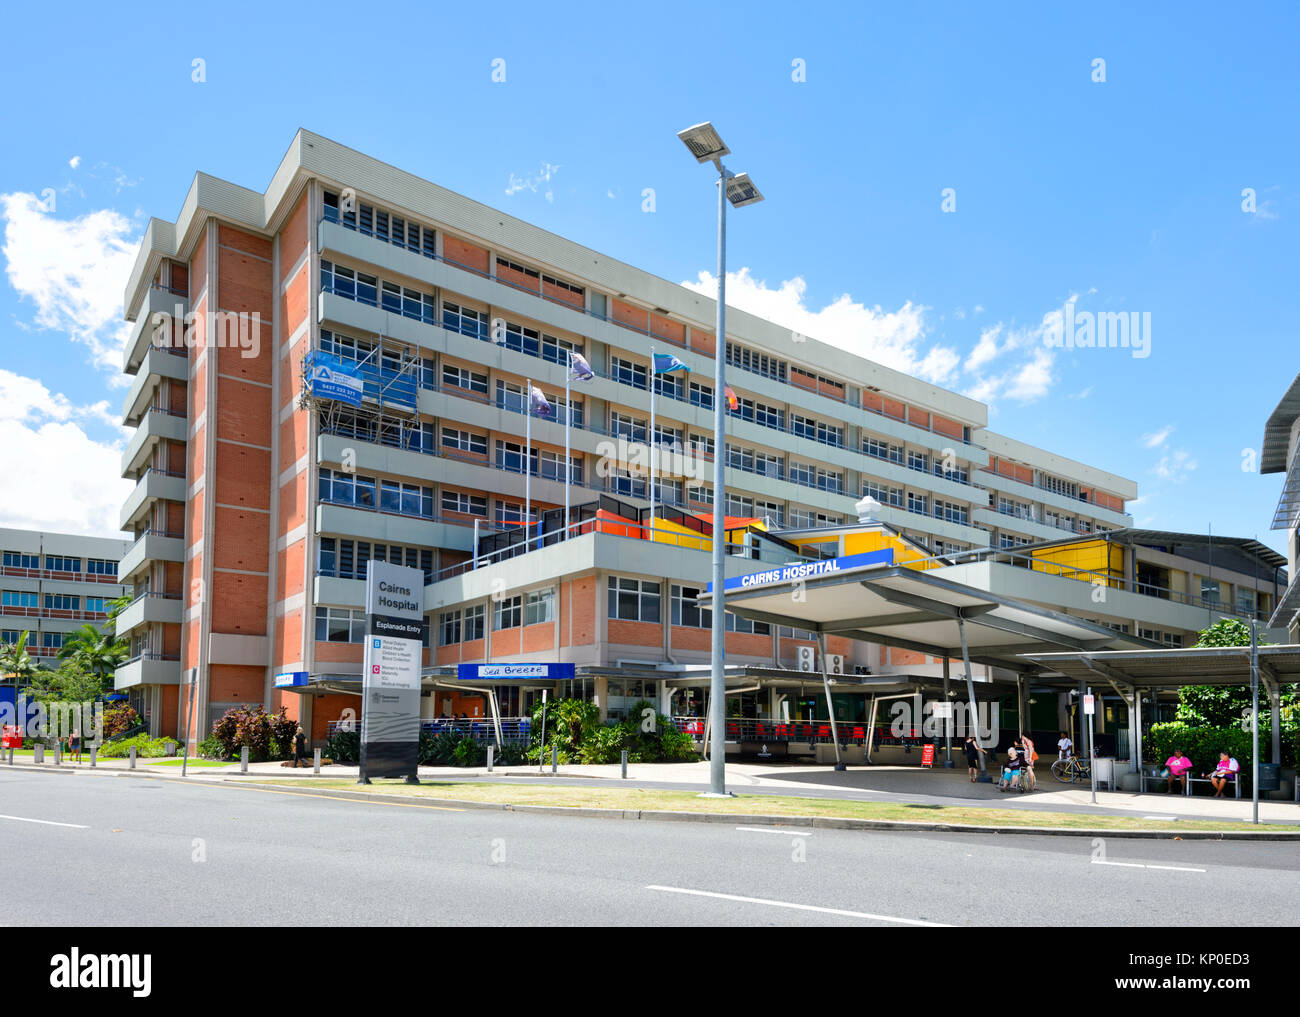 Cairns Hospital, Far North Queensland, FNQ, QLD, Australia Stock Photo